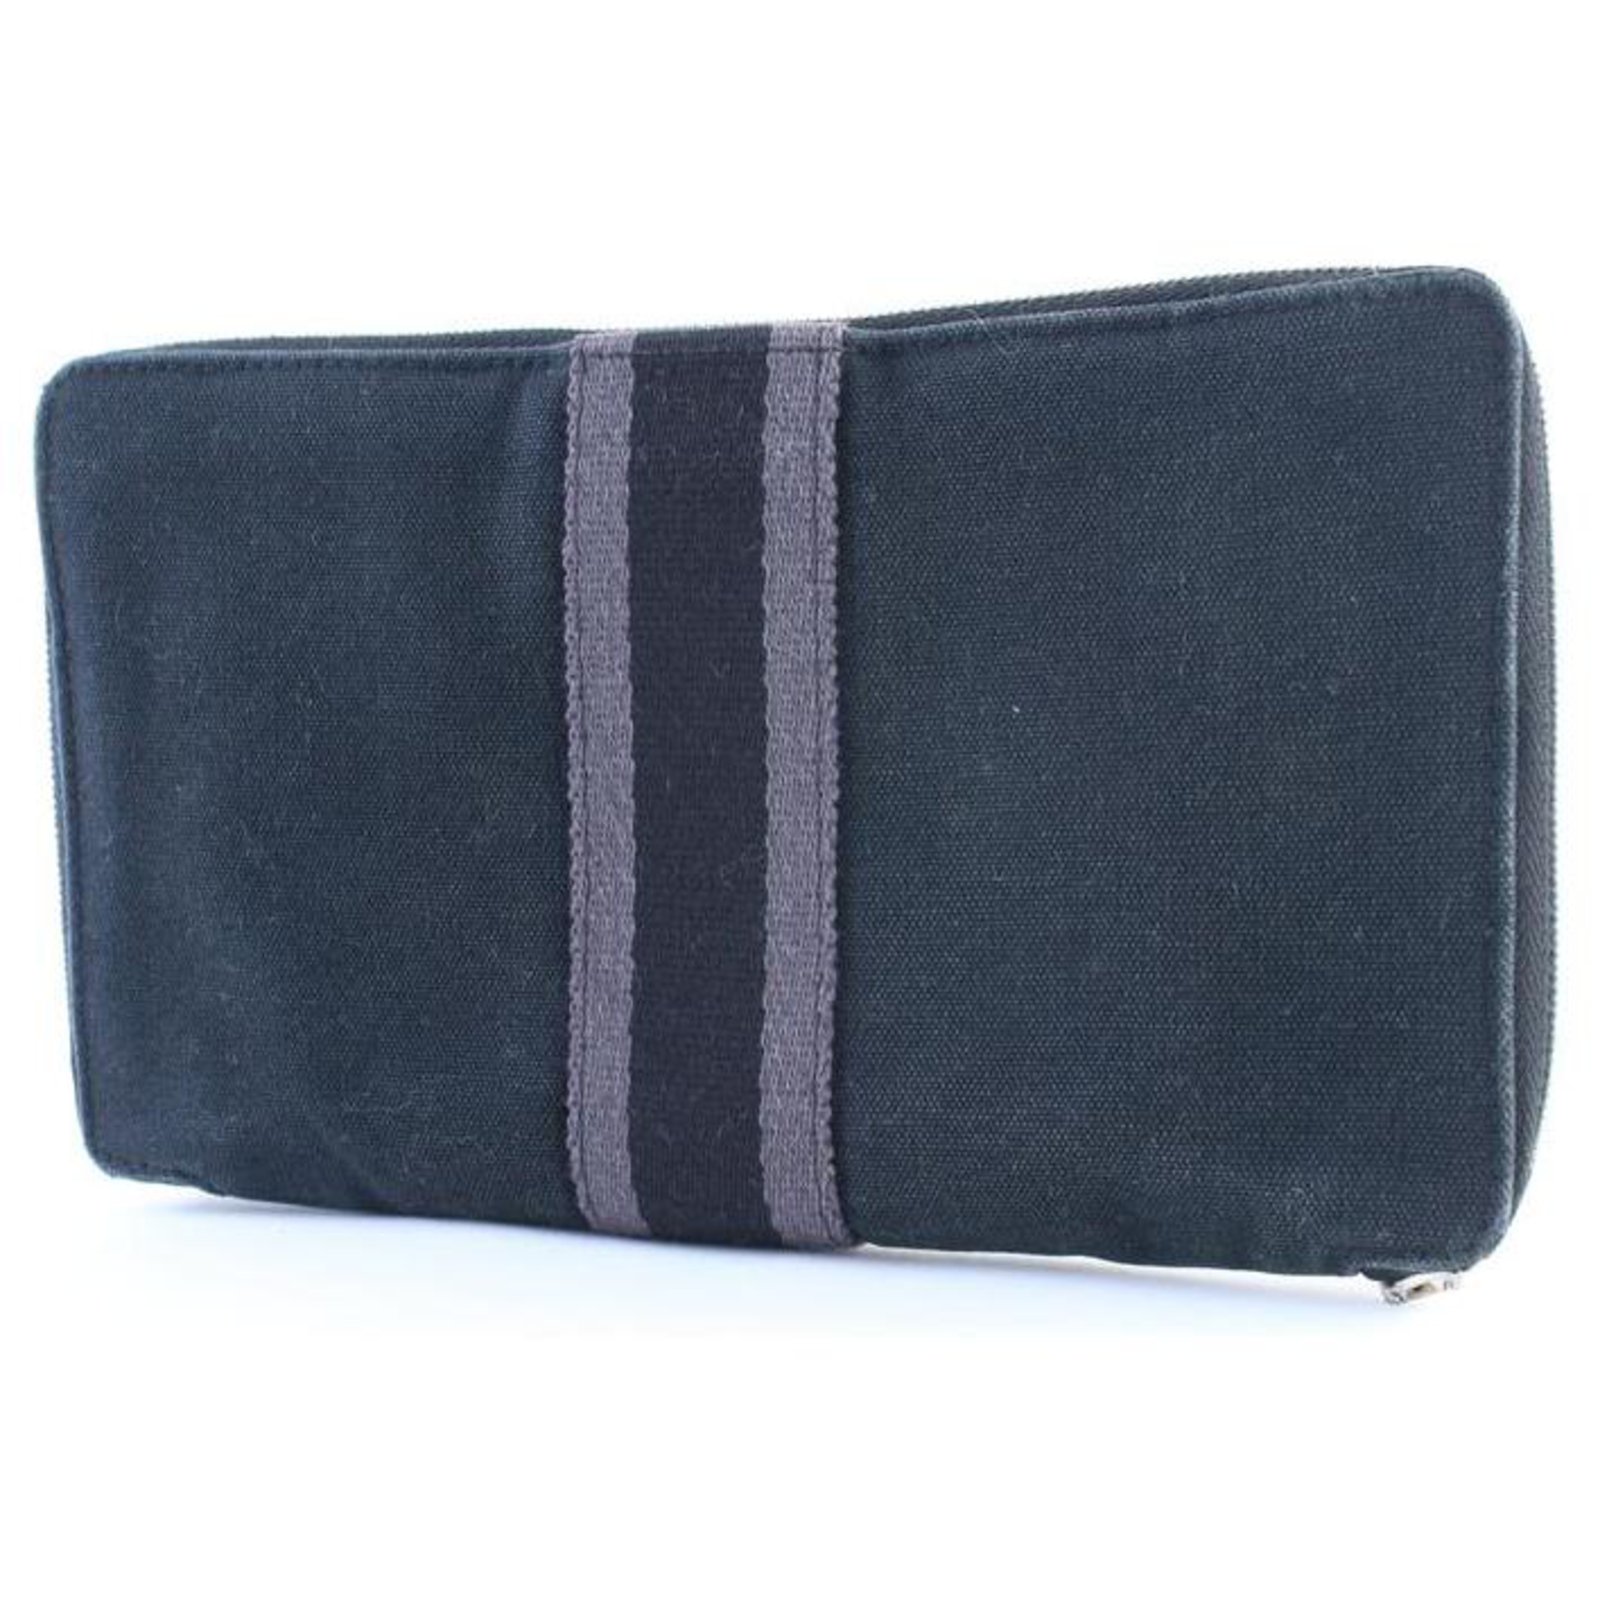 zippy organizer wallet